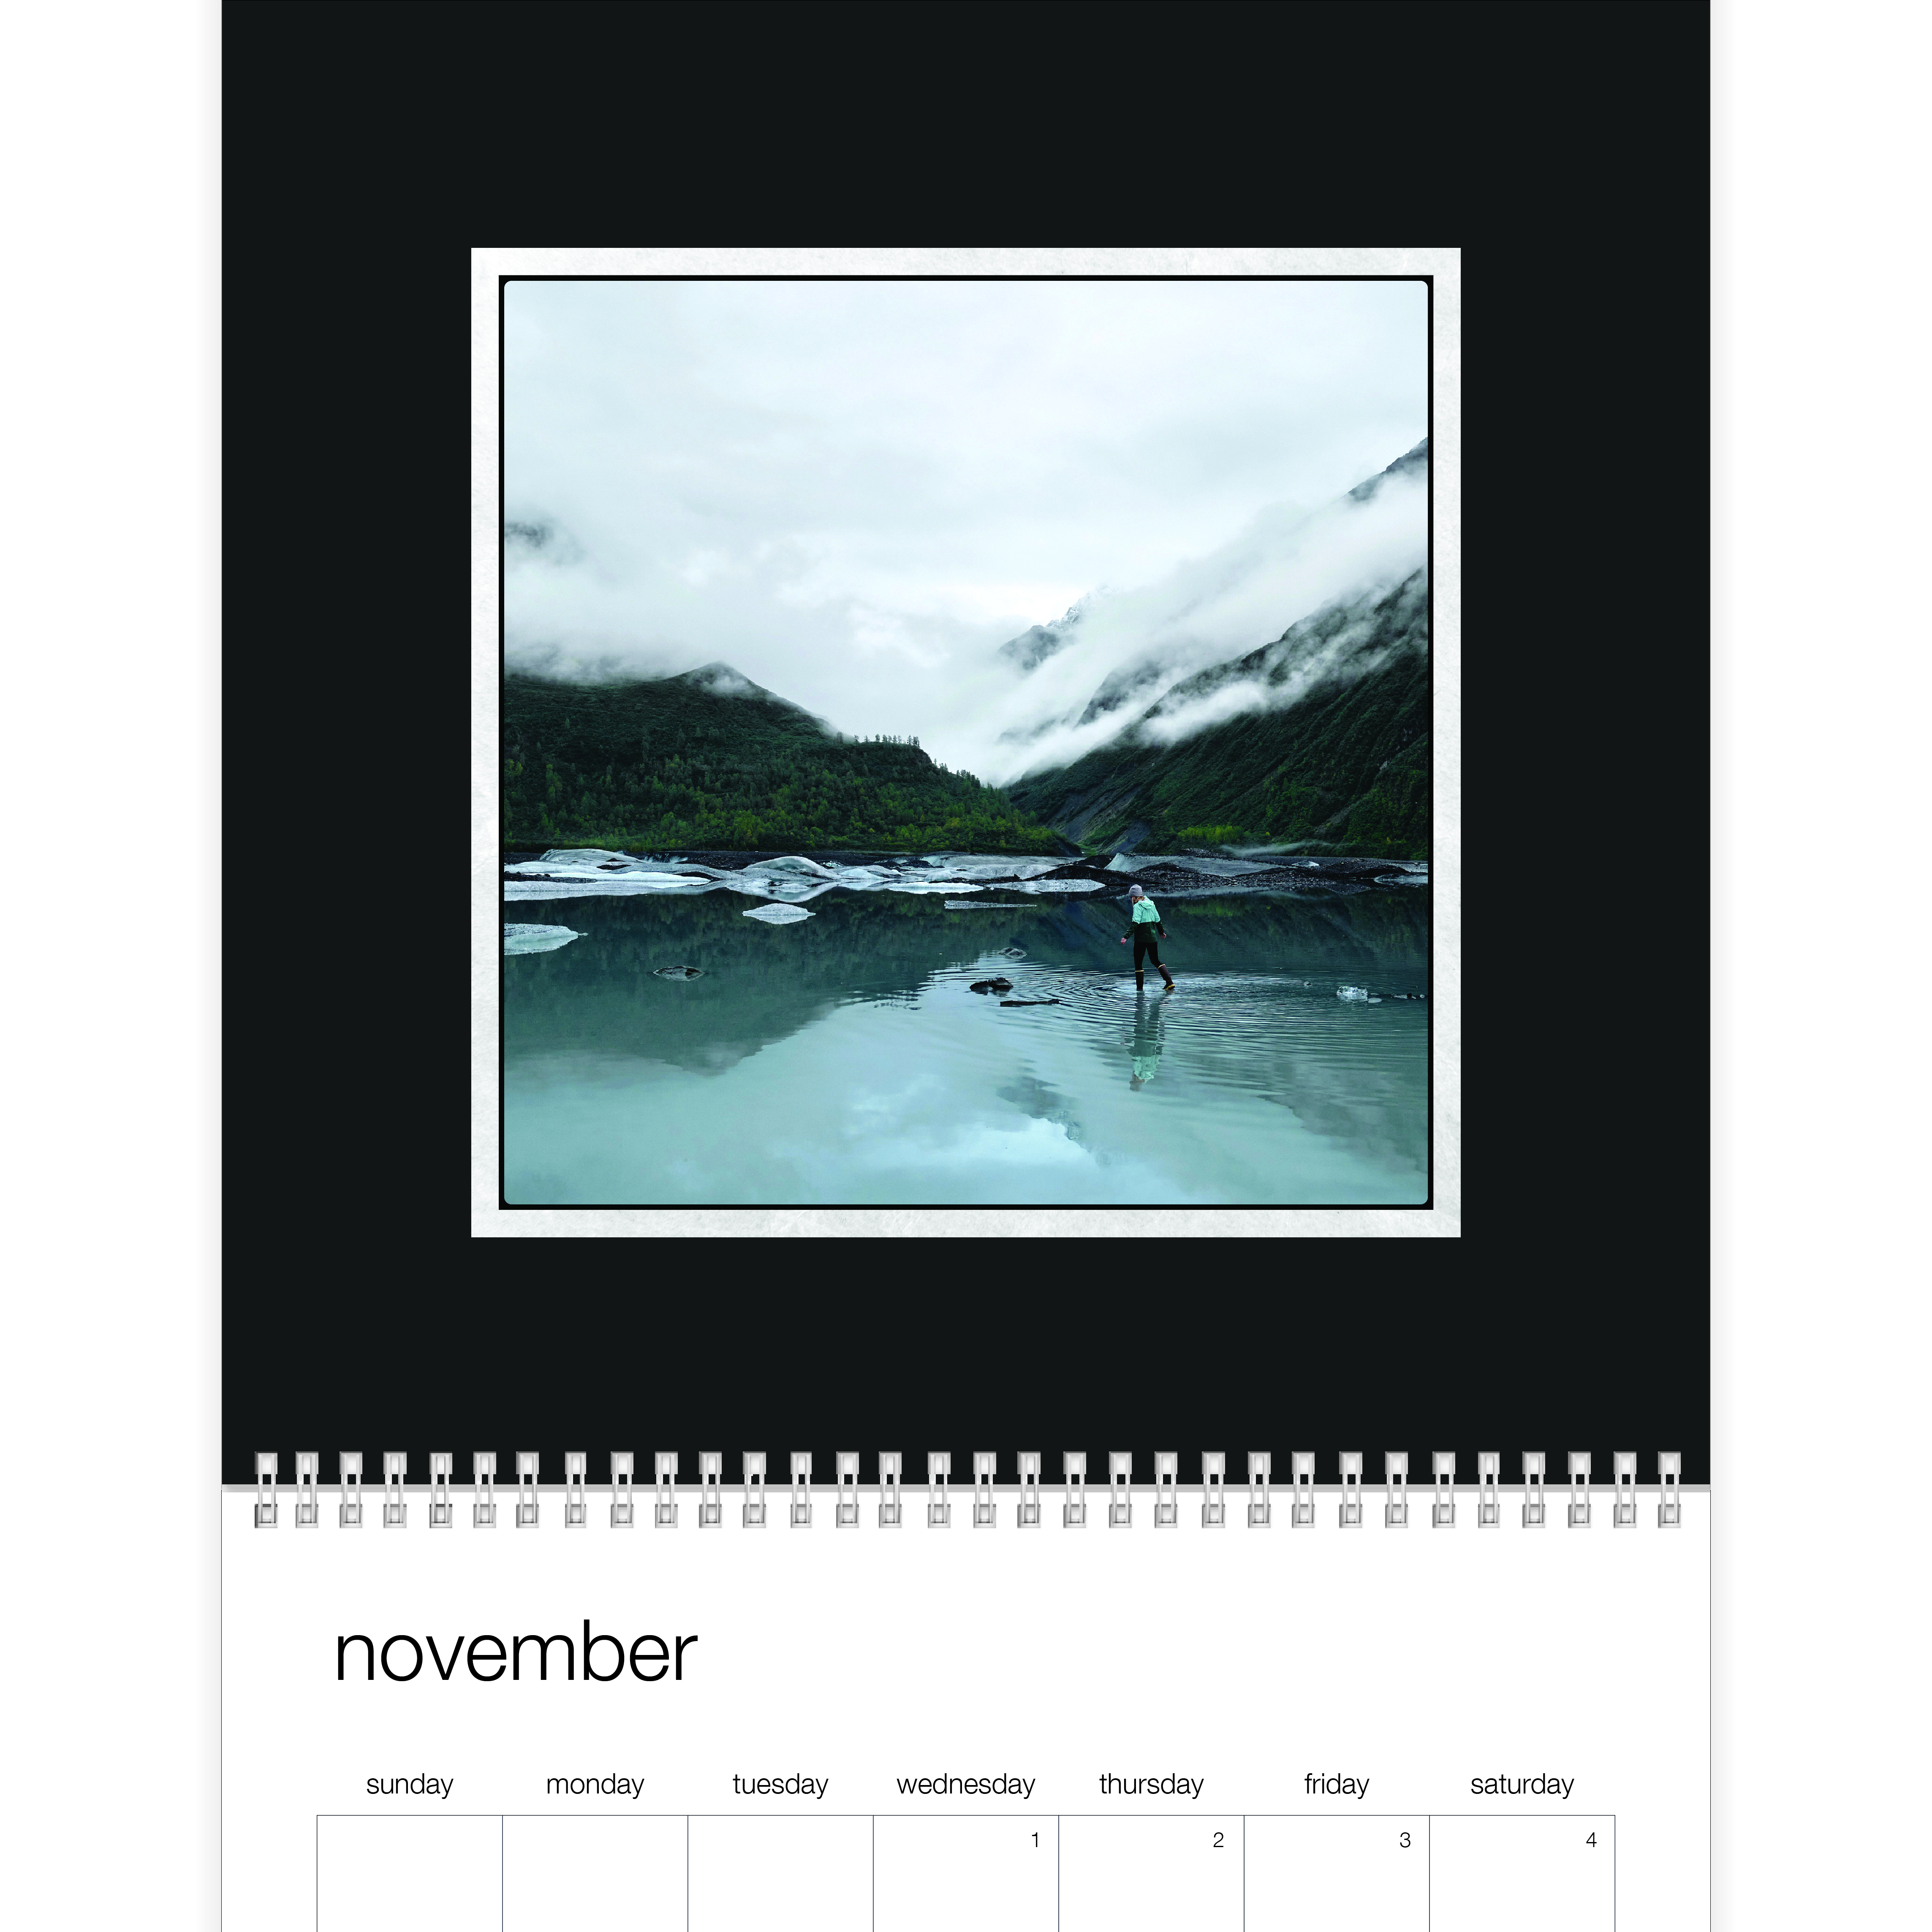 Black and White Gallery Calendar Wall Calendar, 12x12